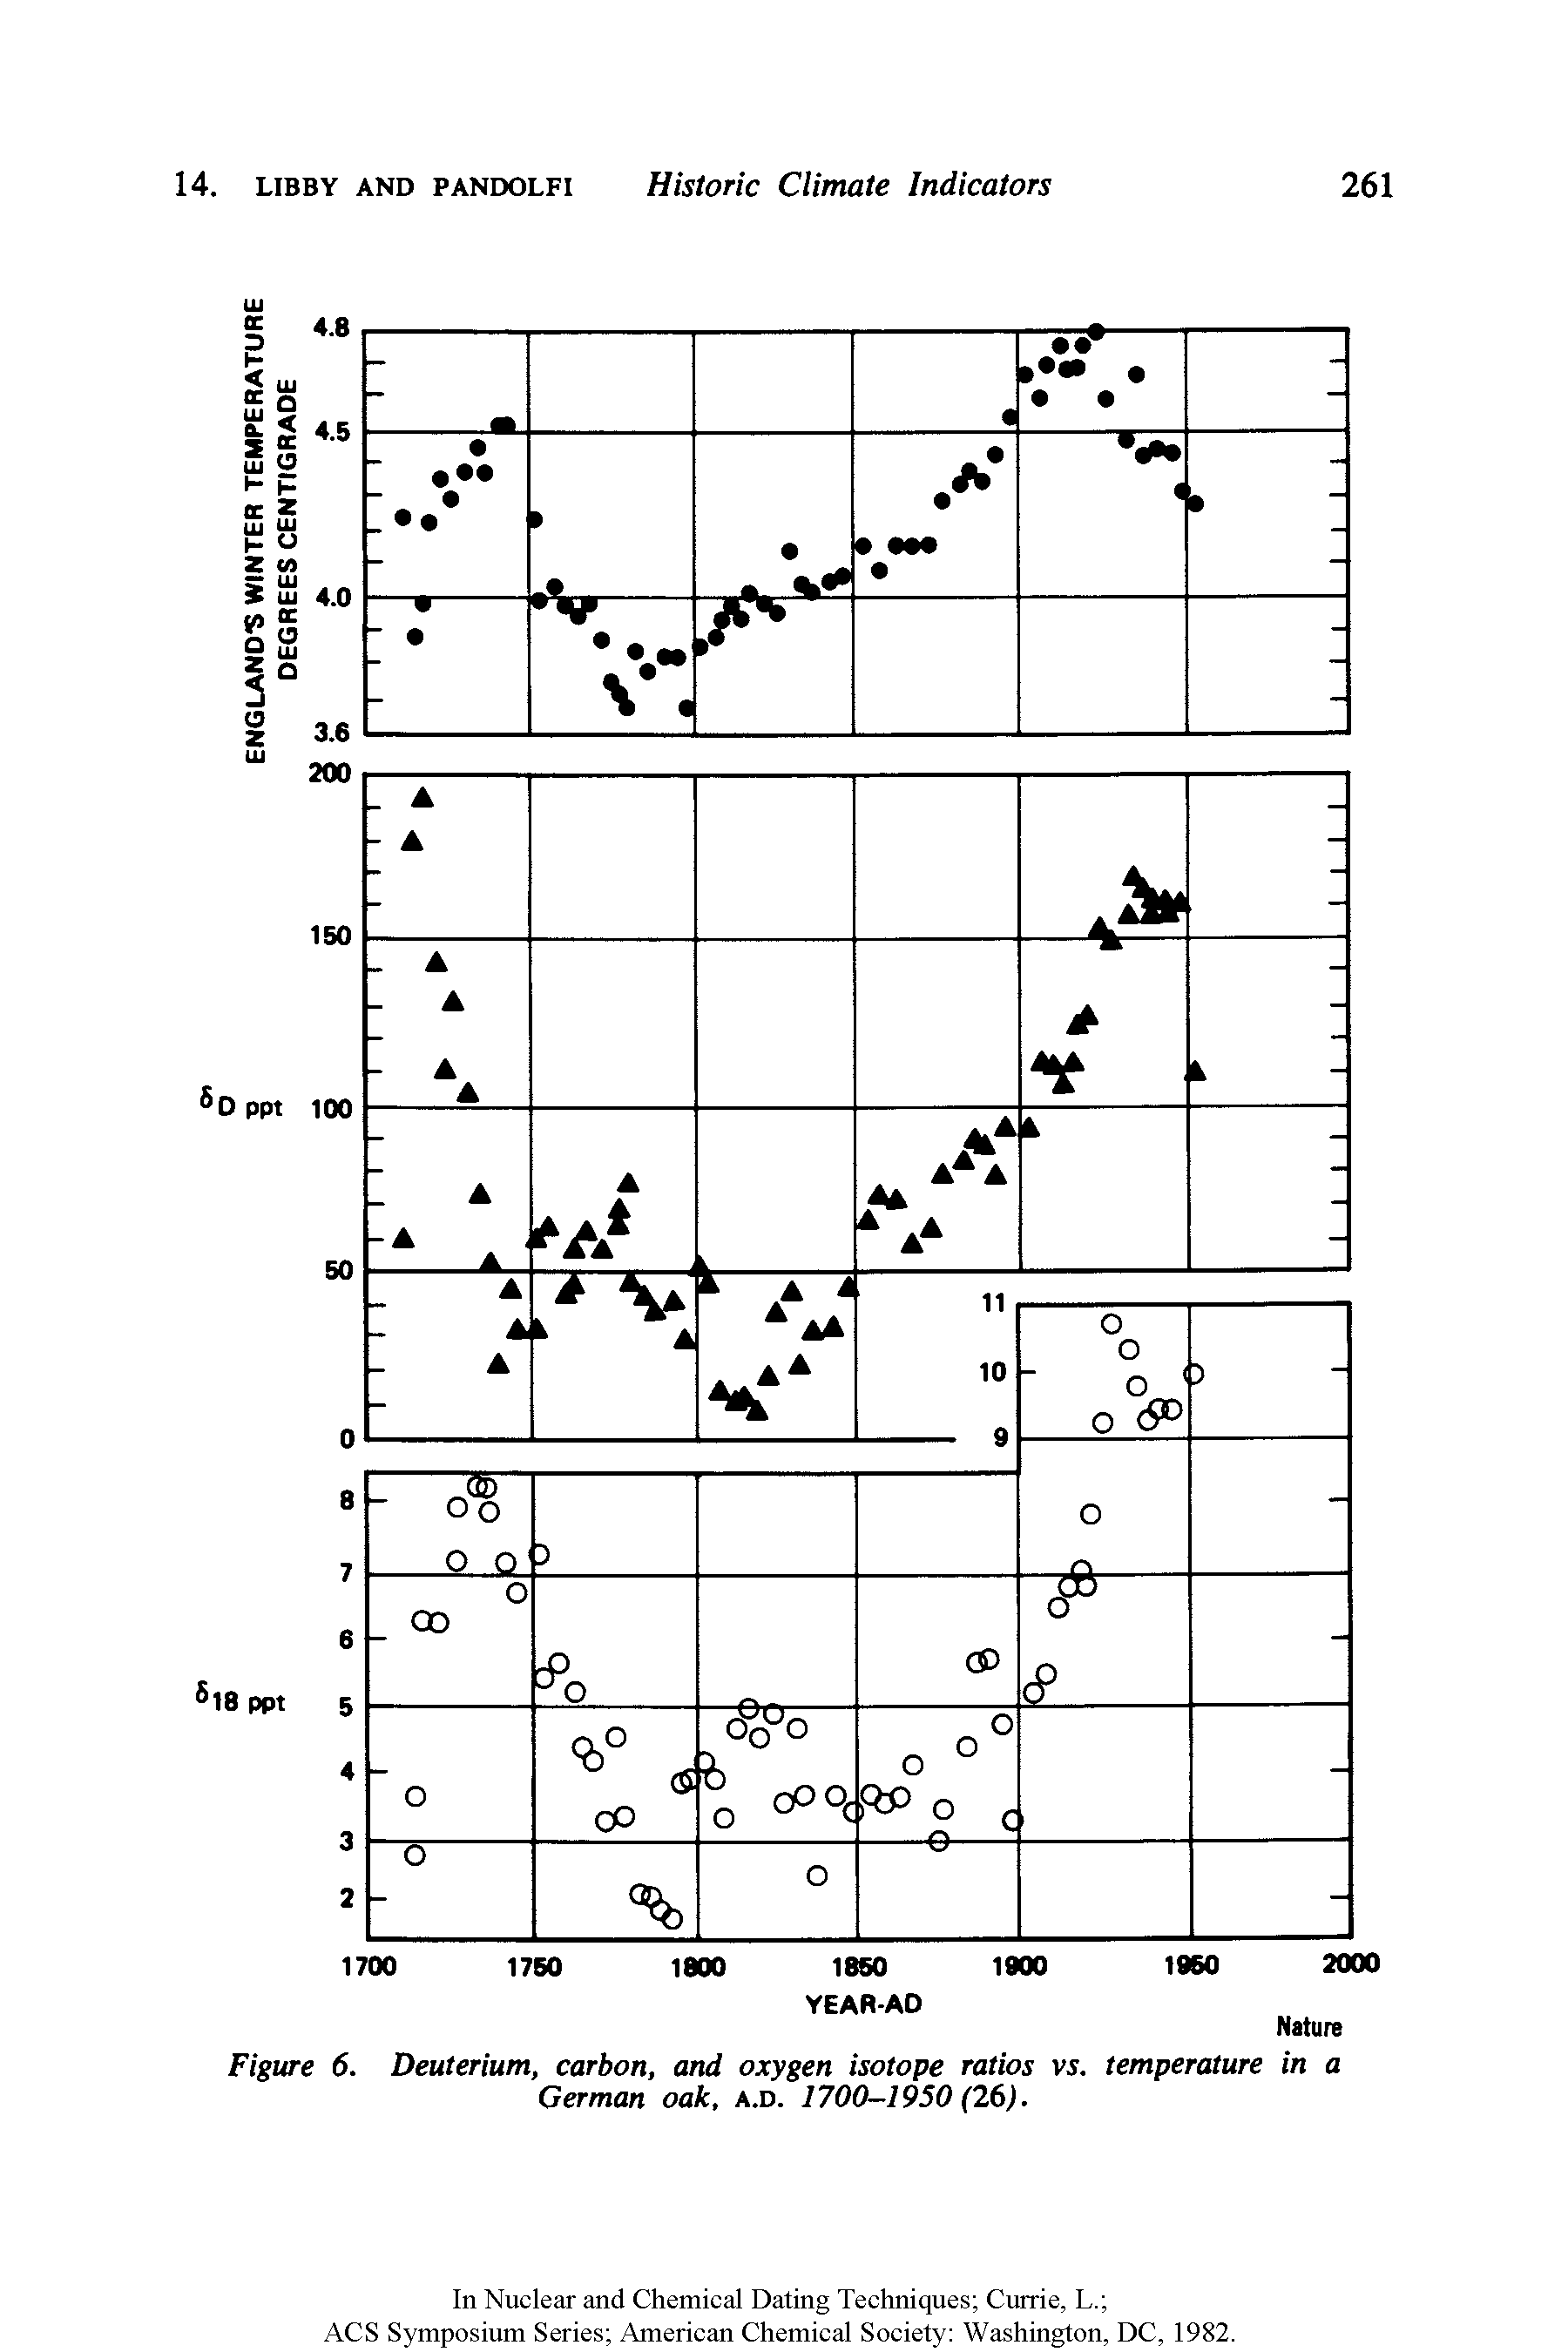 Figure 6. Deuterium, carbon, and oxygen isotope ratios vs. temperature in a German oak, a.d. 1700-1950 (26).